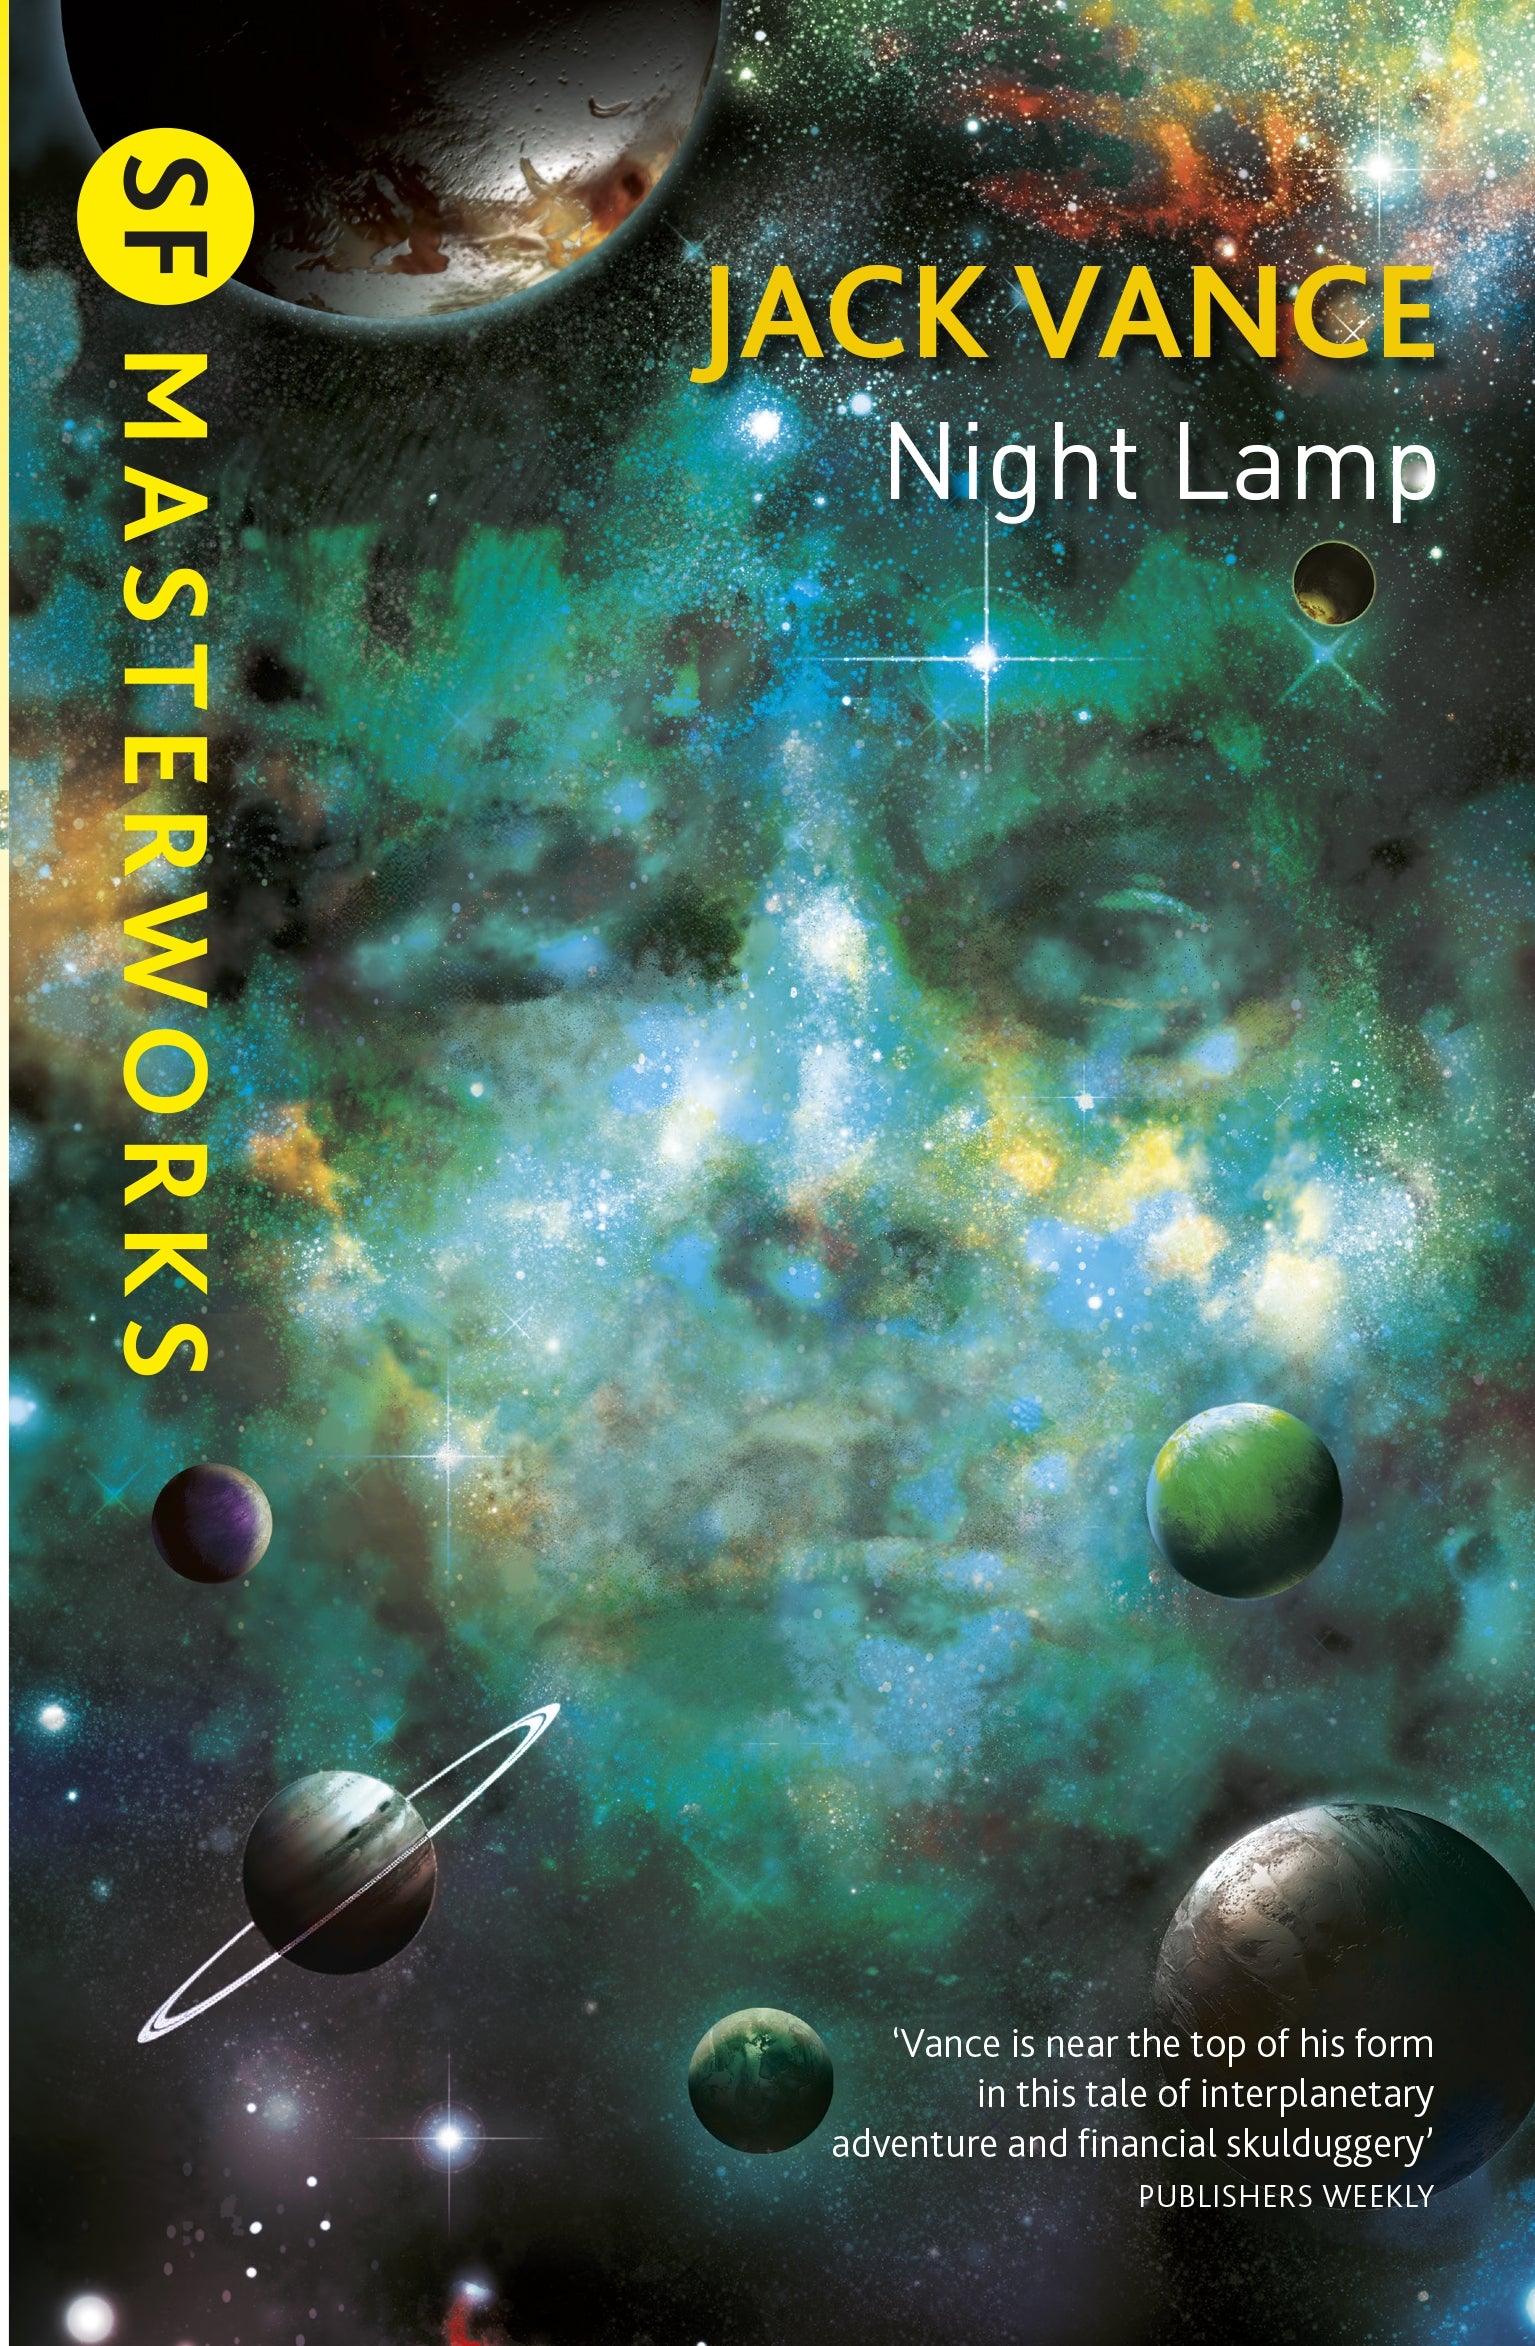 Night Lamp by Jack Vance